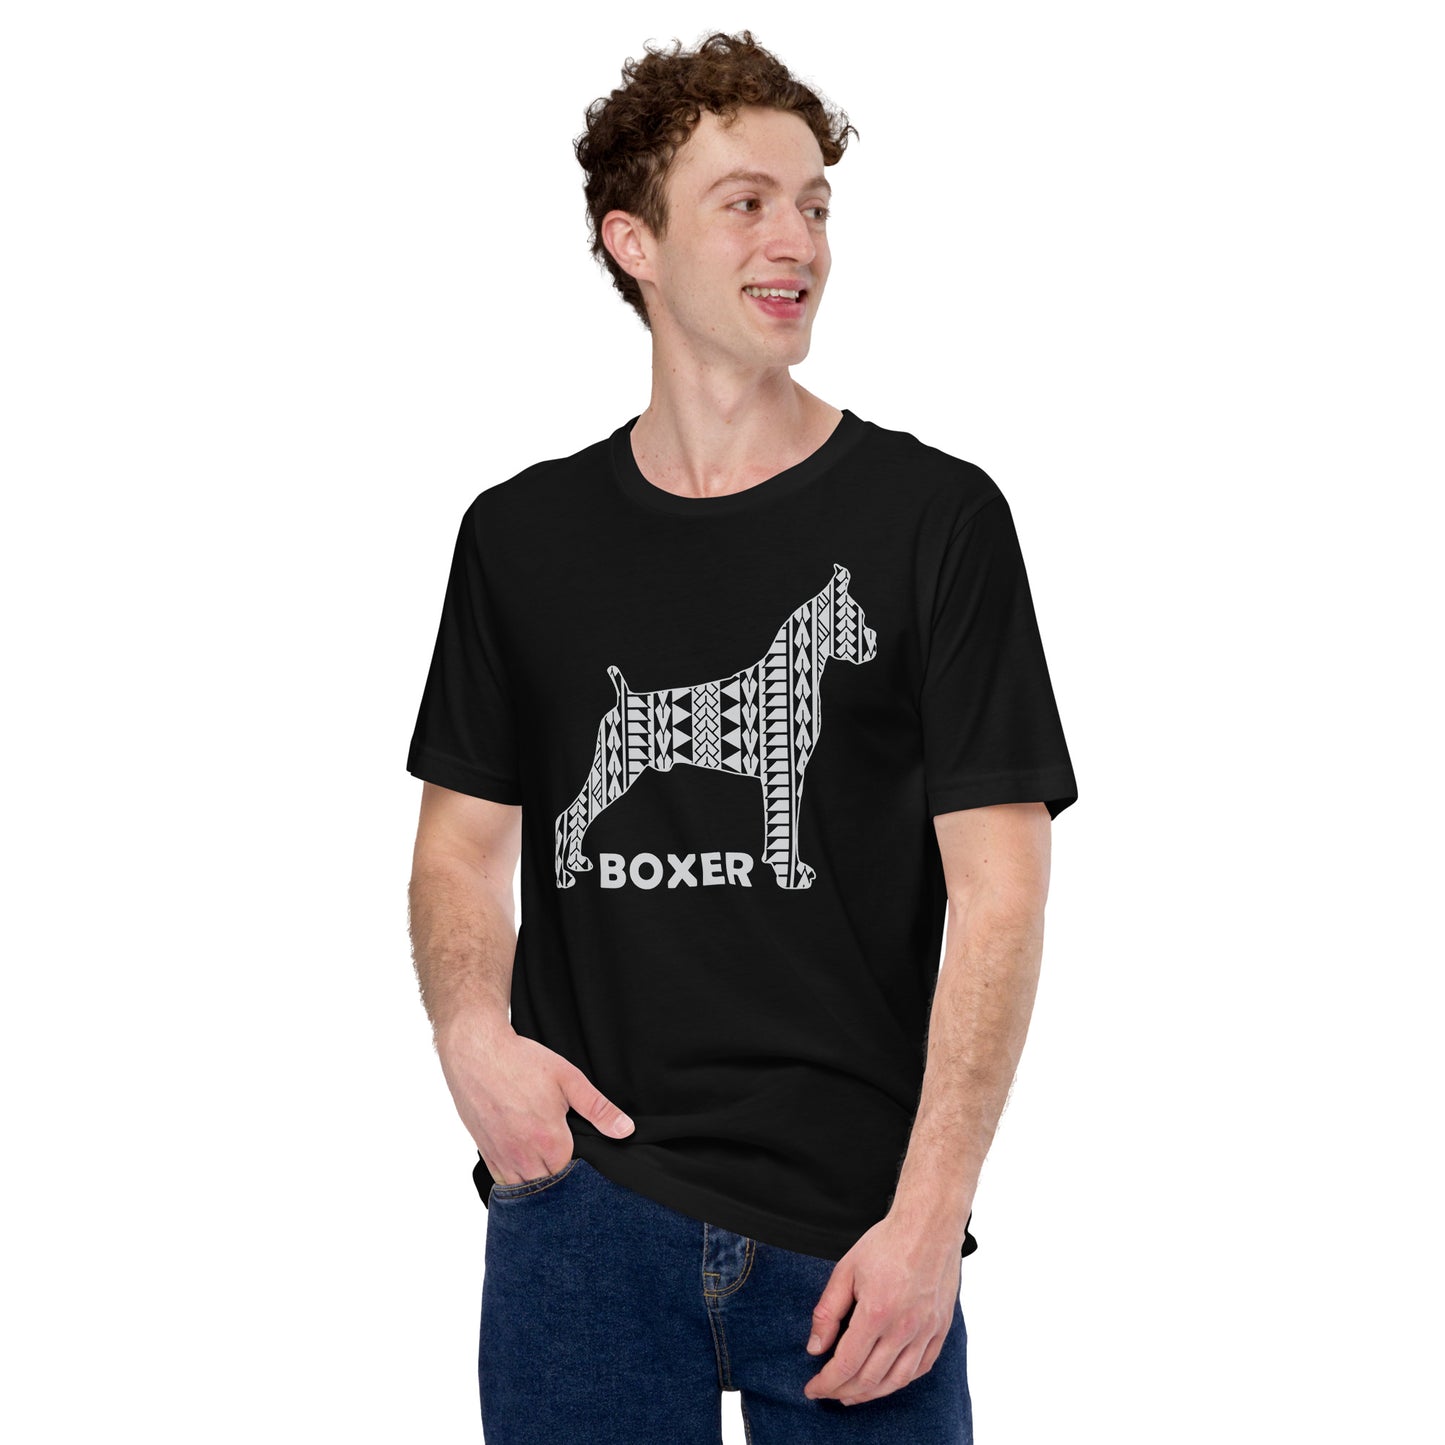 Boxer Polynesian t-shirt black by Dog Artistry.